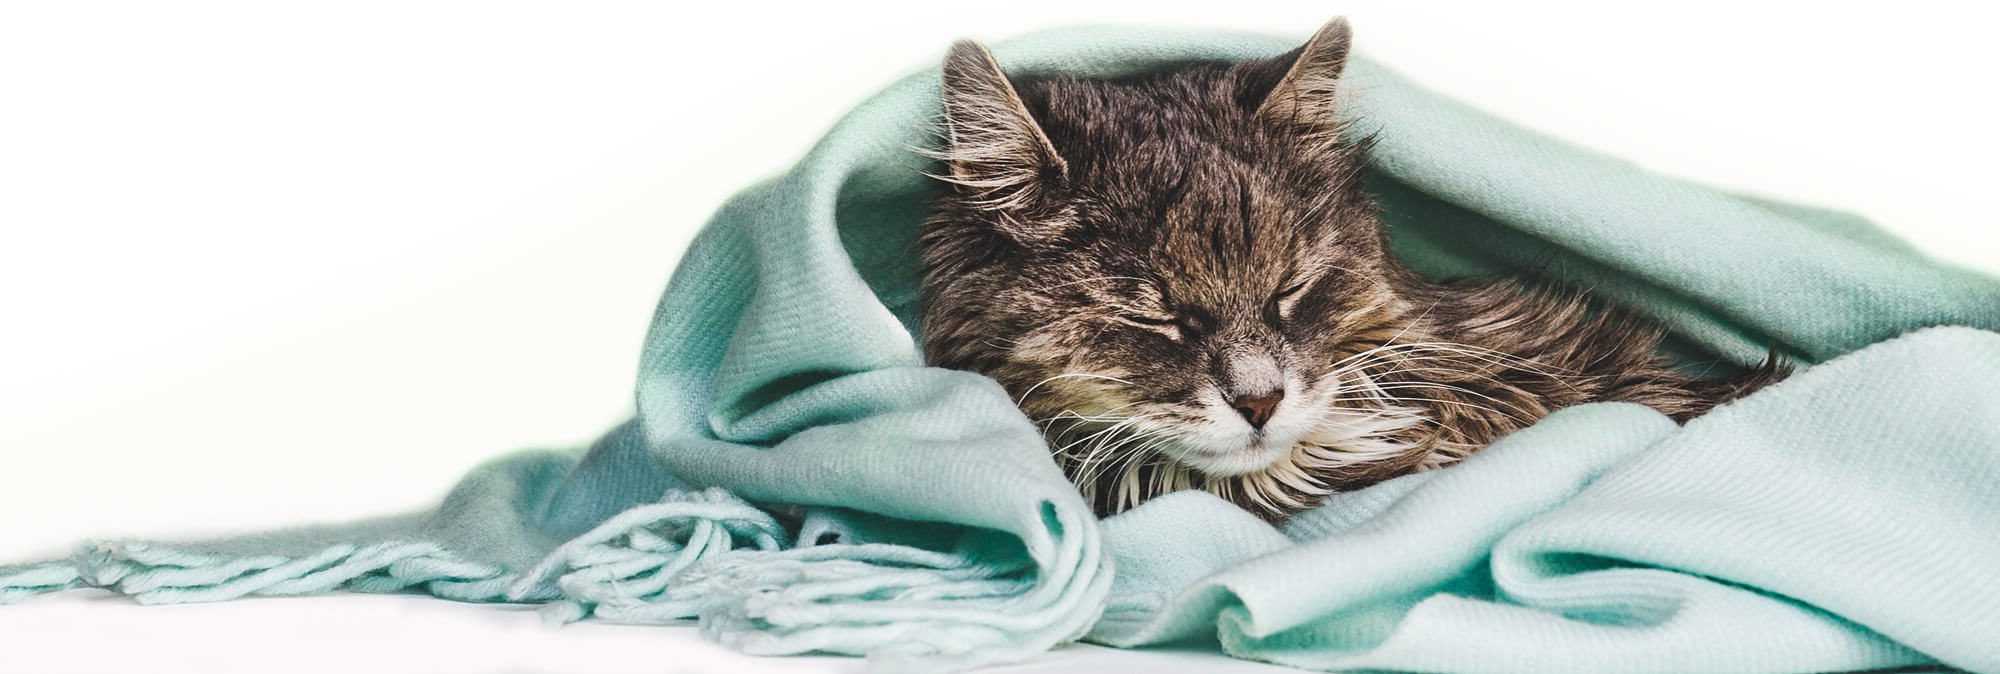 Cat Snuggling Blanket